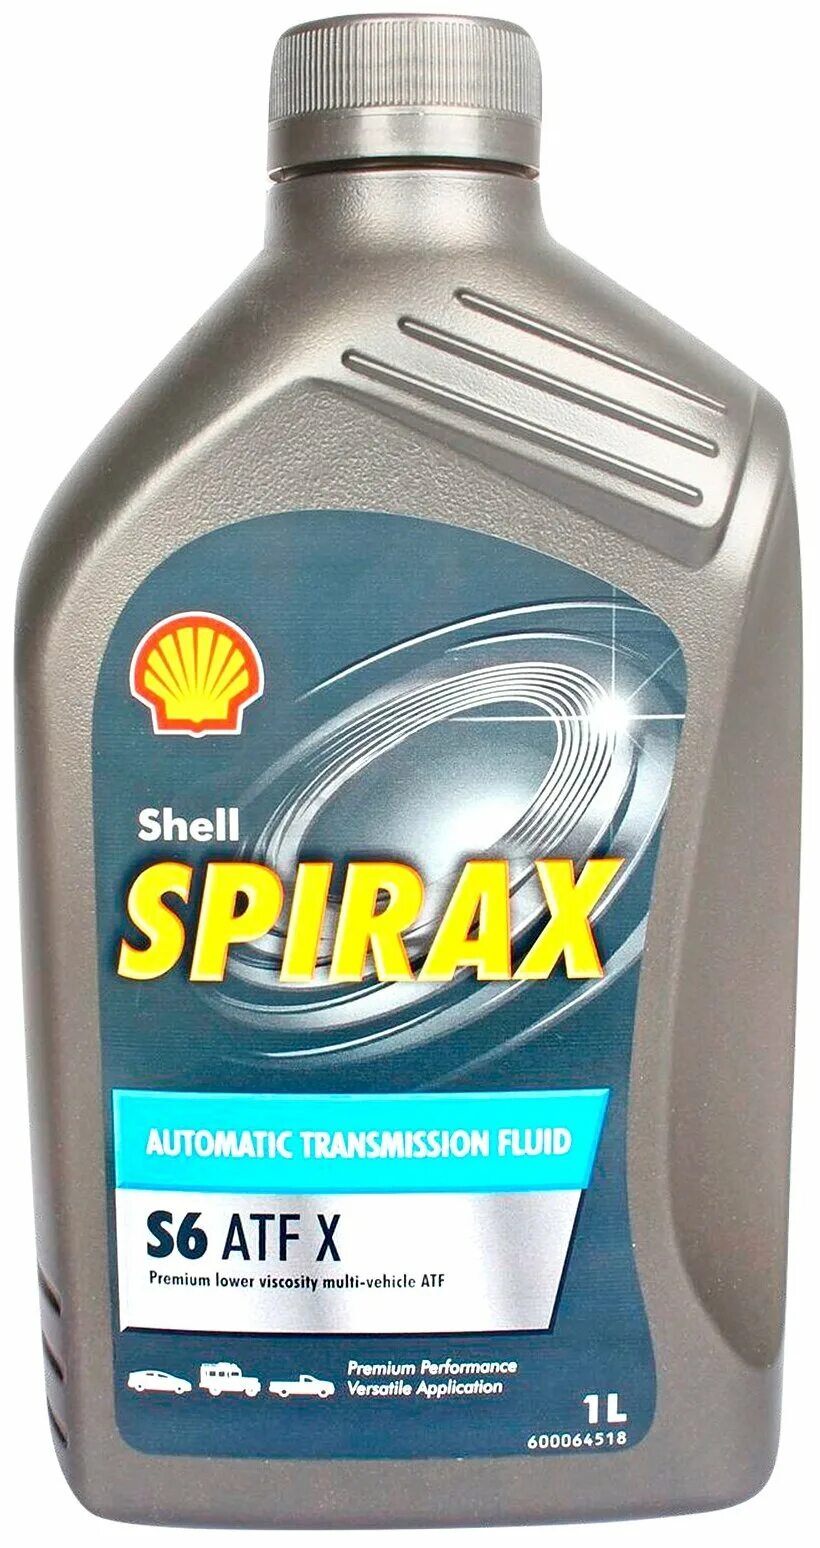 Shell Spirax s6 ATF. Shell Spirax s6 ATF X. Трансмиссионное масло Shell Spirax s6 ATF X.